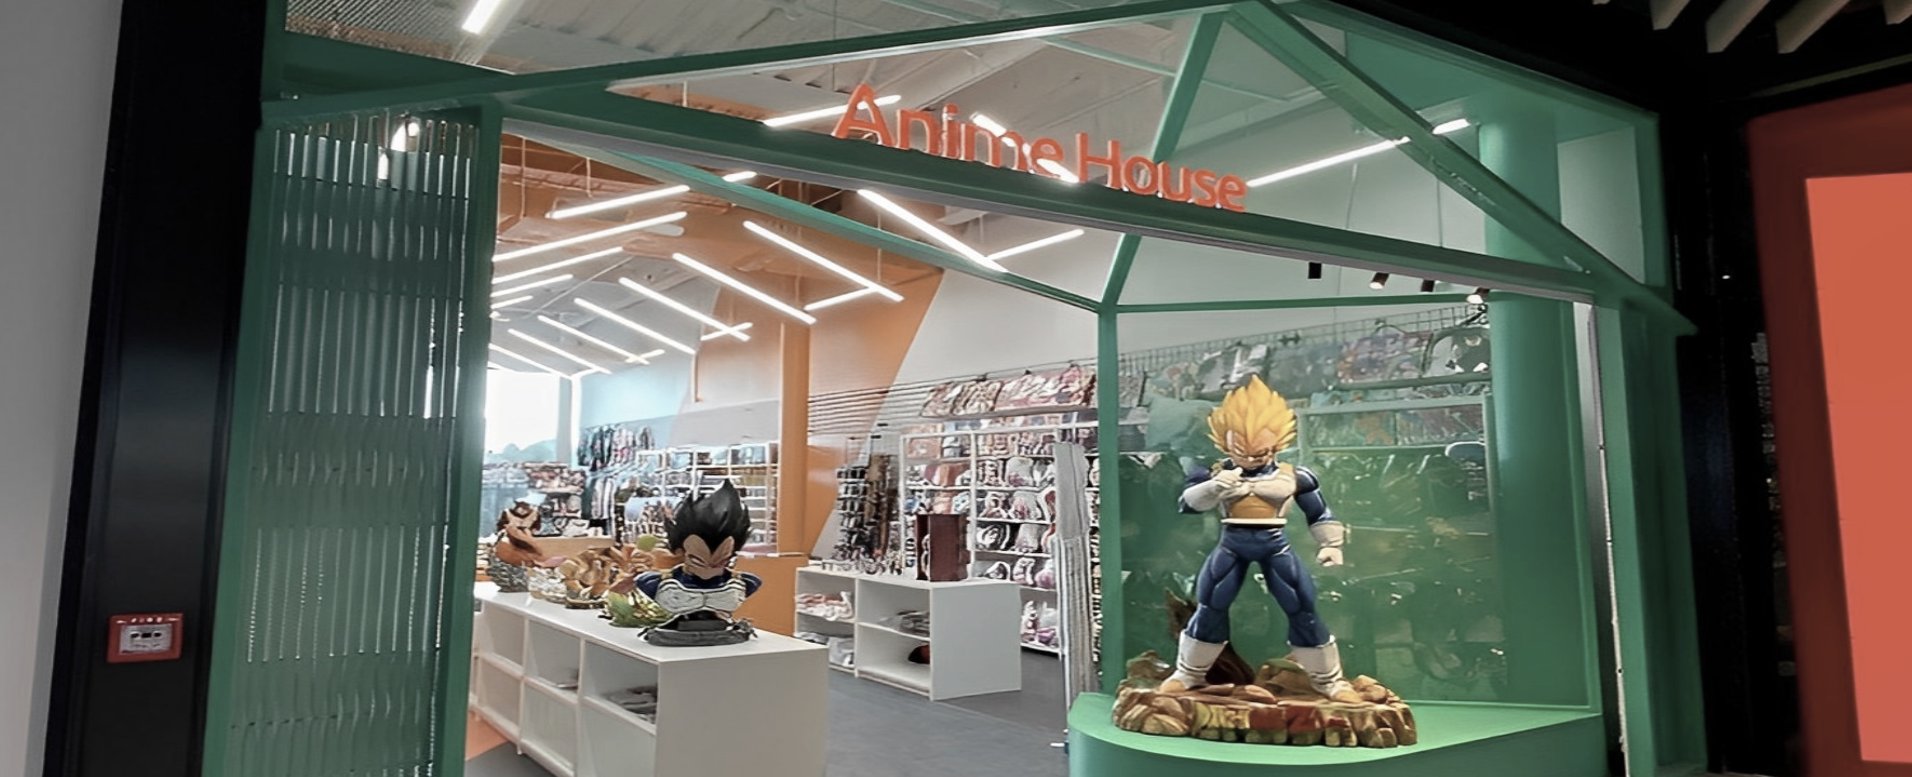 Anime House New Zealand